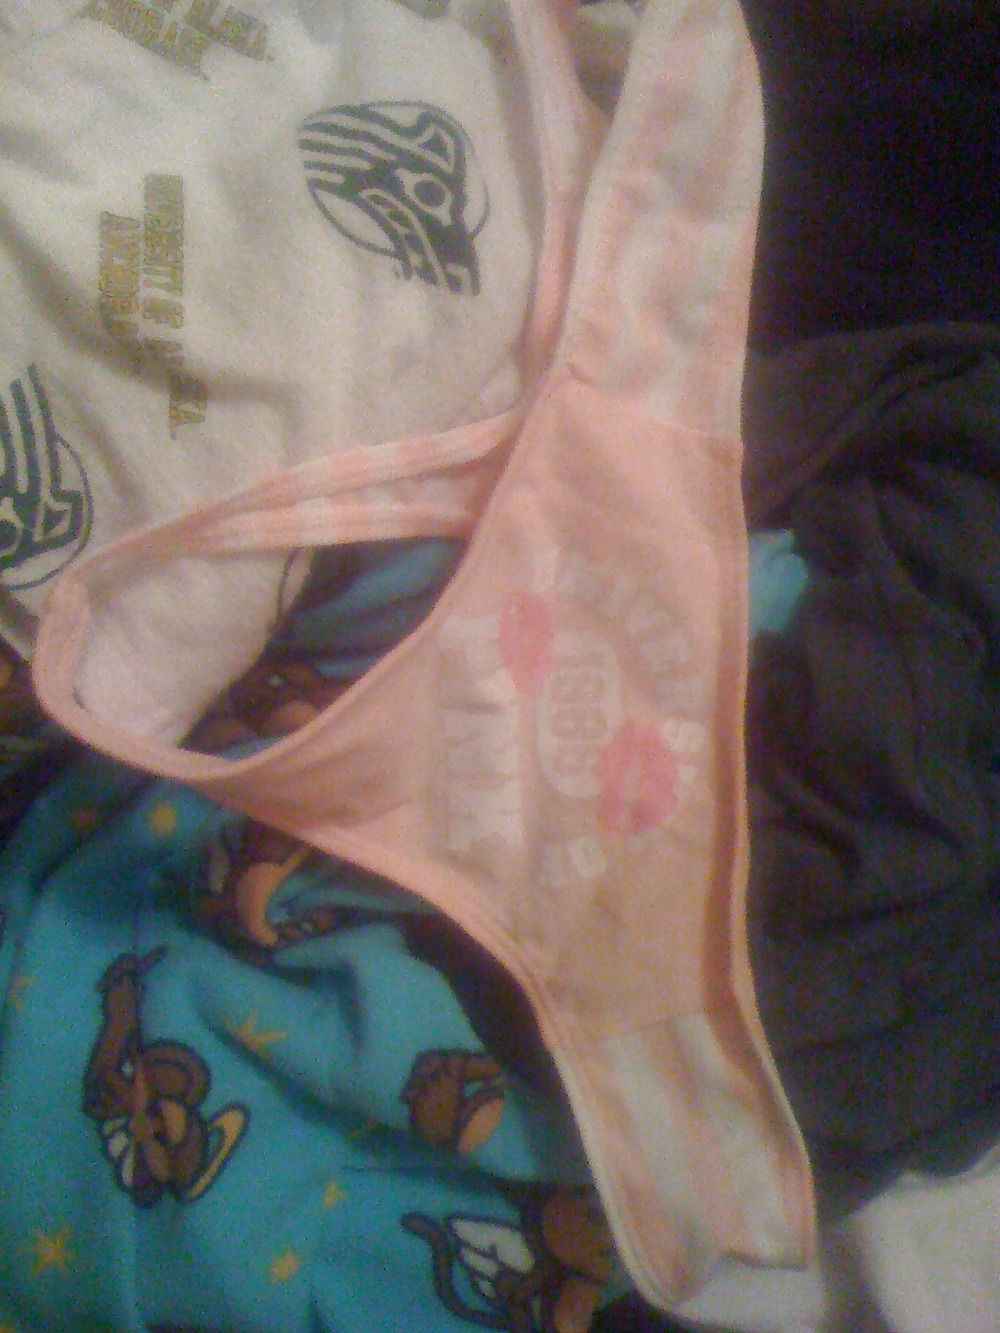 Friend's girl's bras and panties